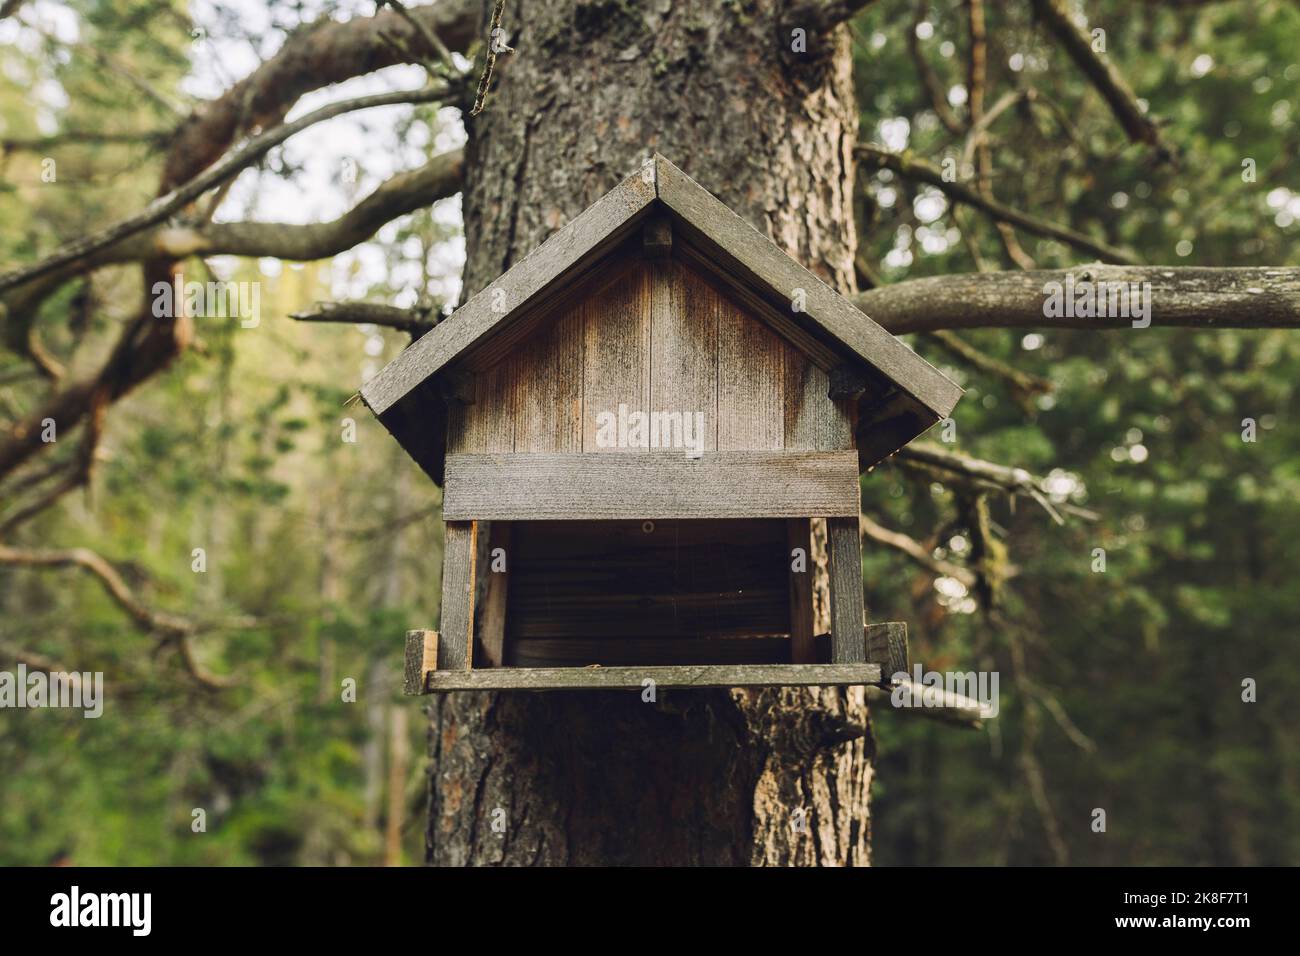 Wooden birdhouse hanging on tree trunk Stock Photo